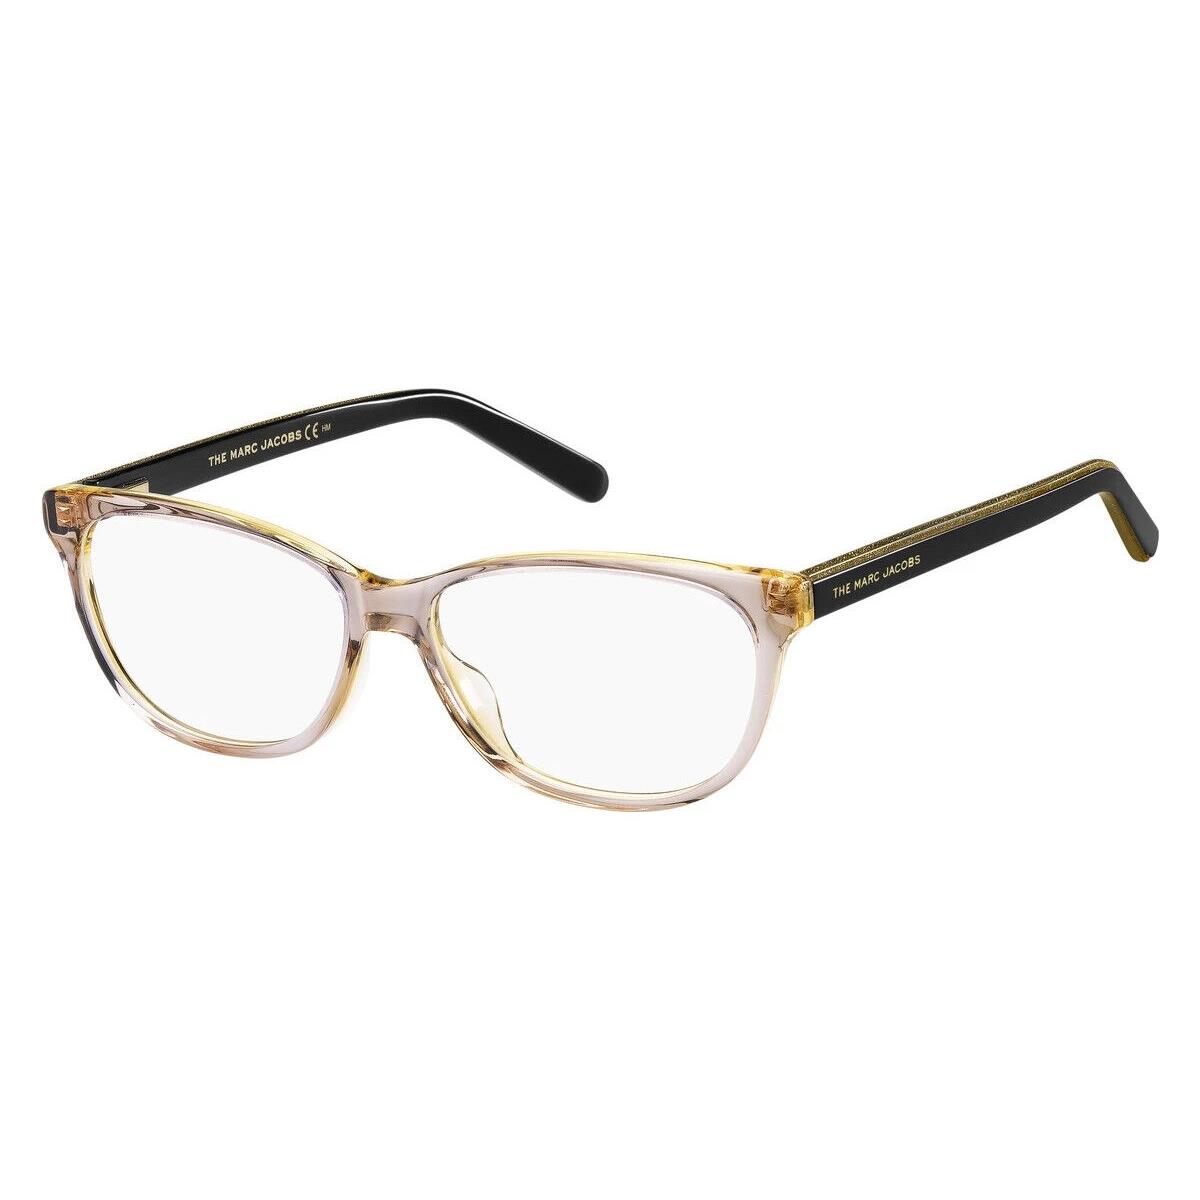 Marc Jacobs eyeglasses Marc - Translucent Brown , Translucent Brown Frame, Clear with demo print Lens 2